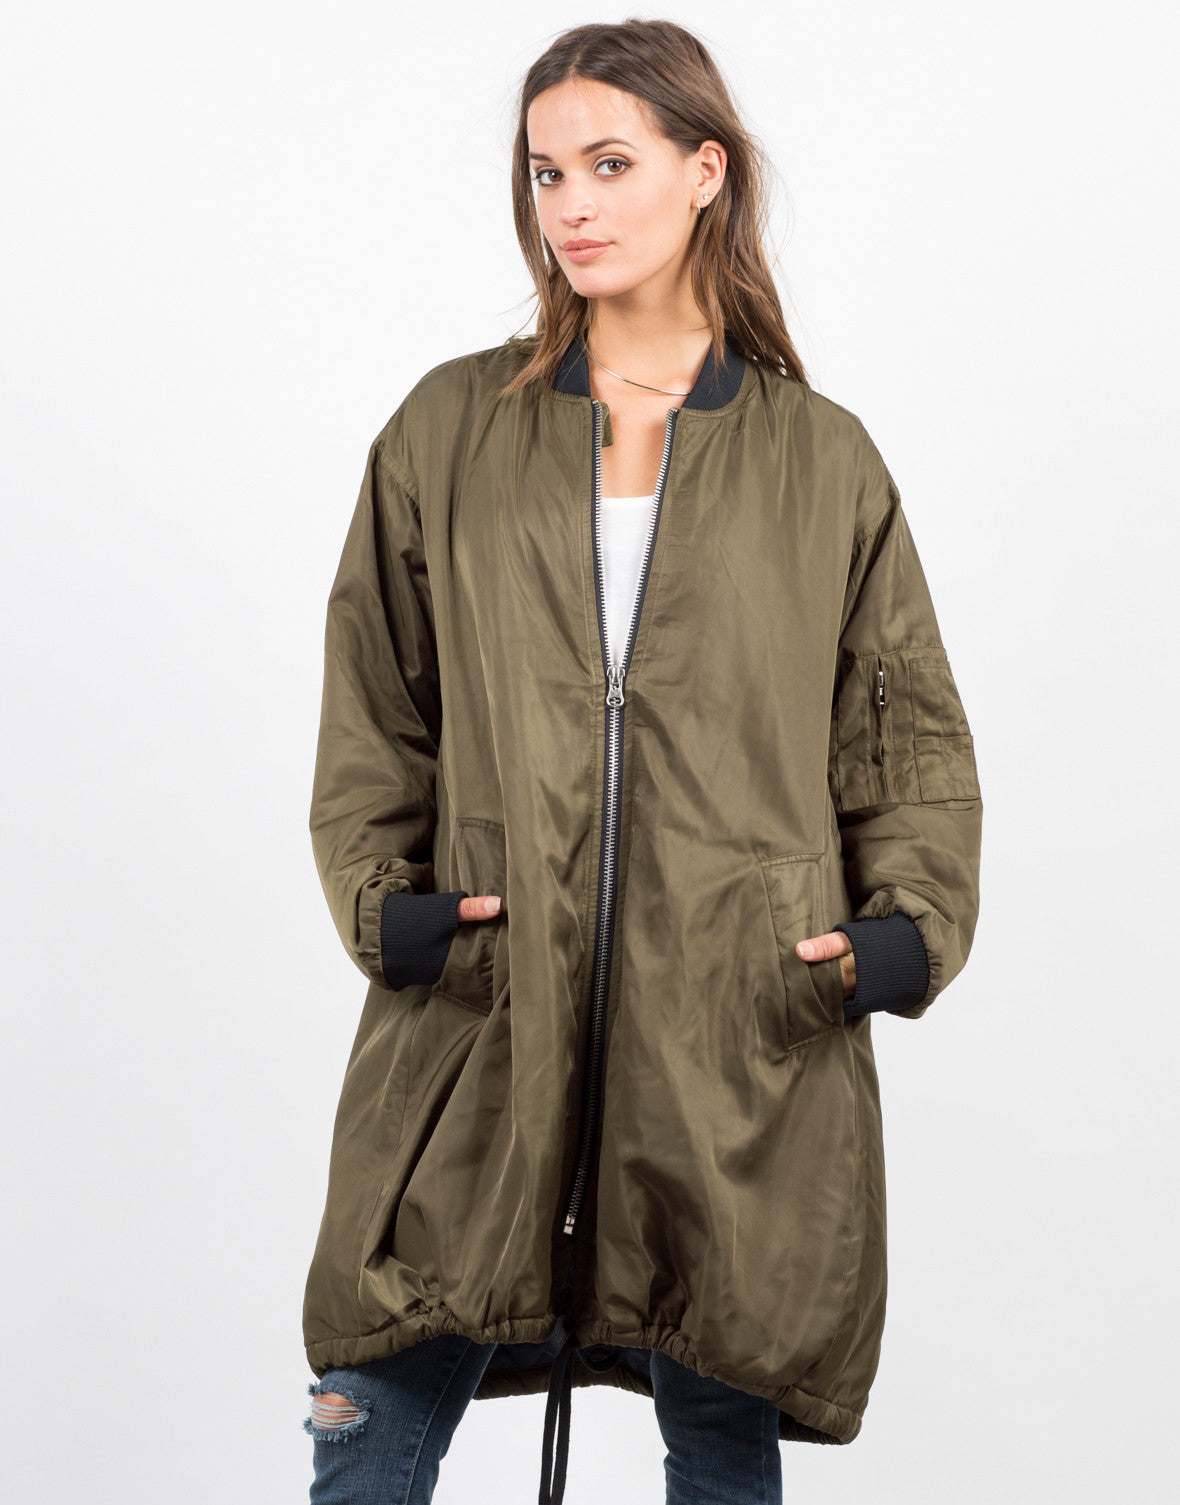 Spiksplinternieuw Long Bomber Jacket - Oversize Jacket - Womens Outerwear – 2020AVE TW-92